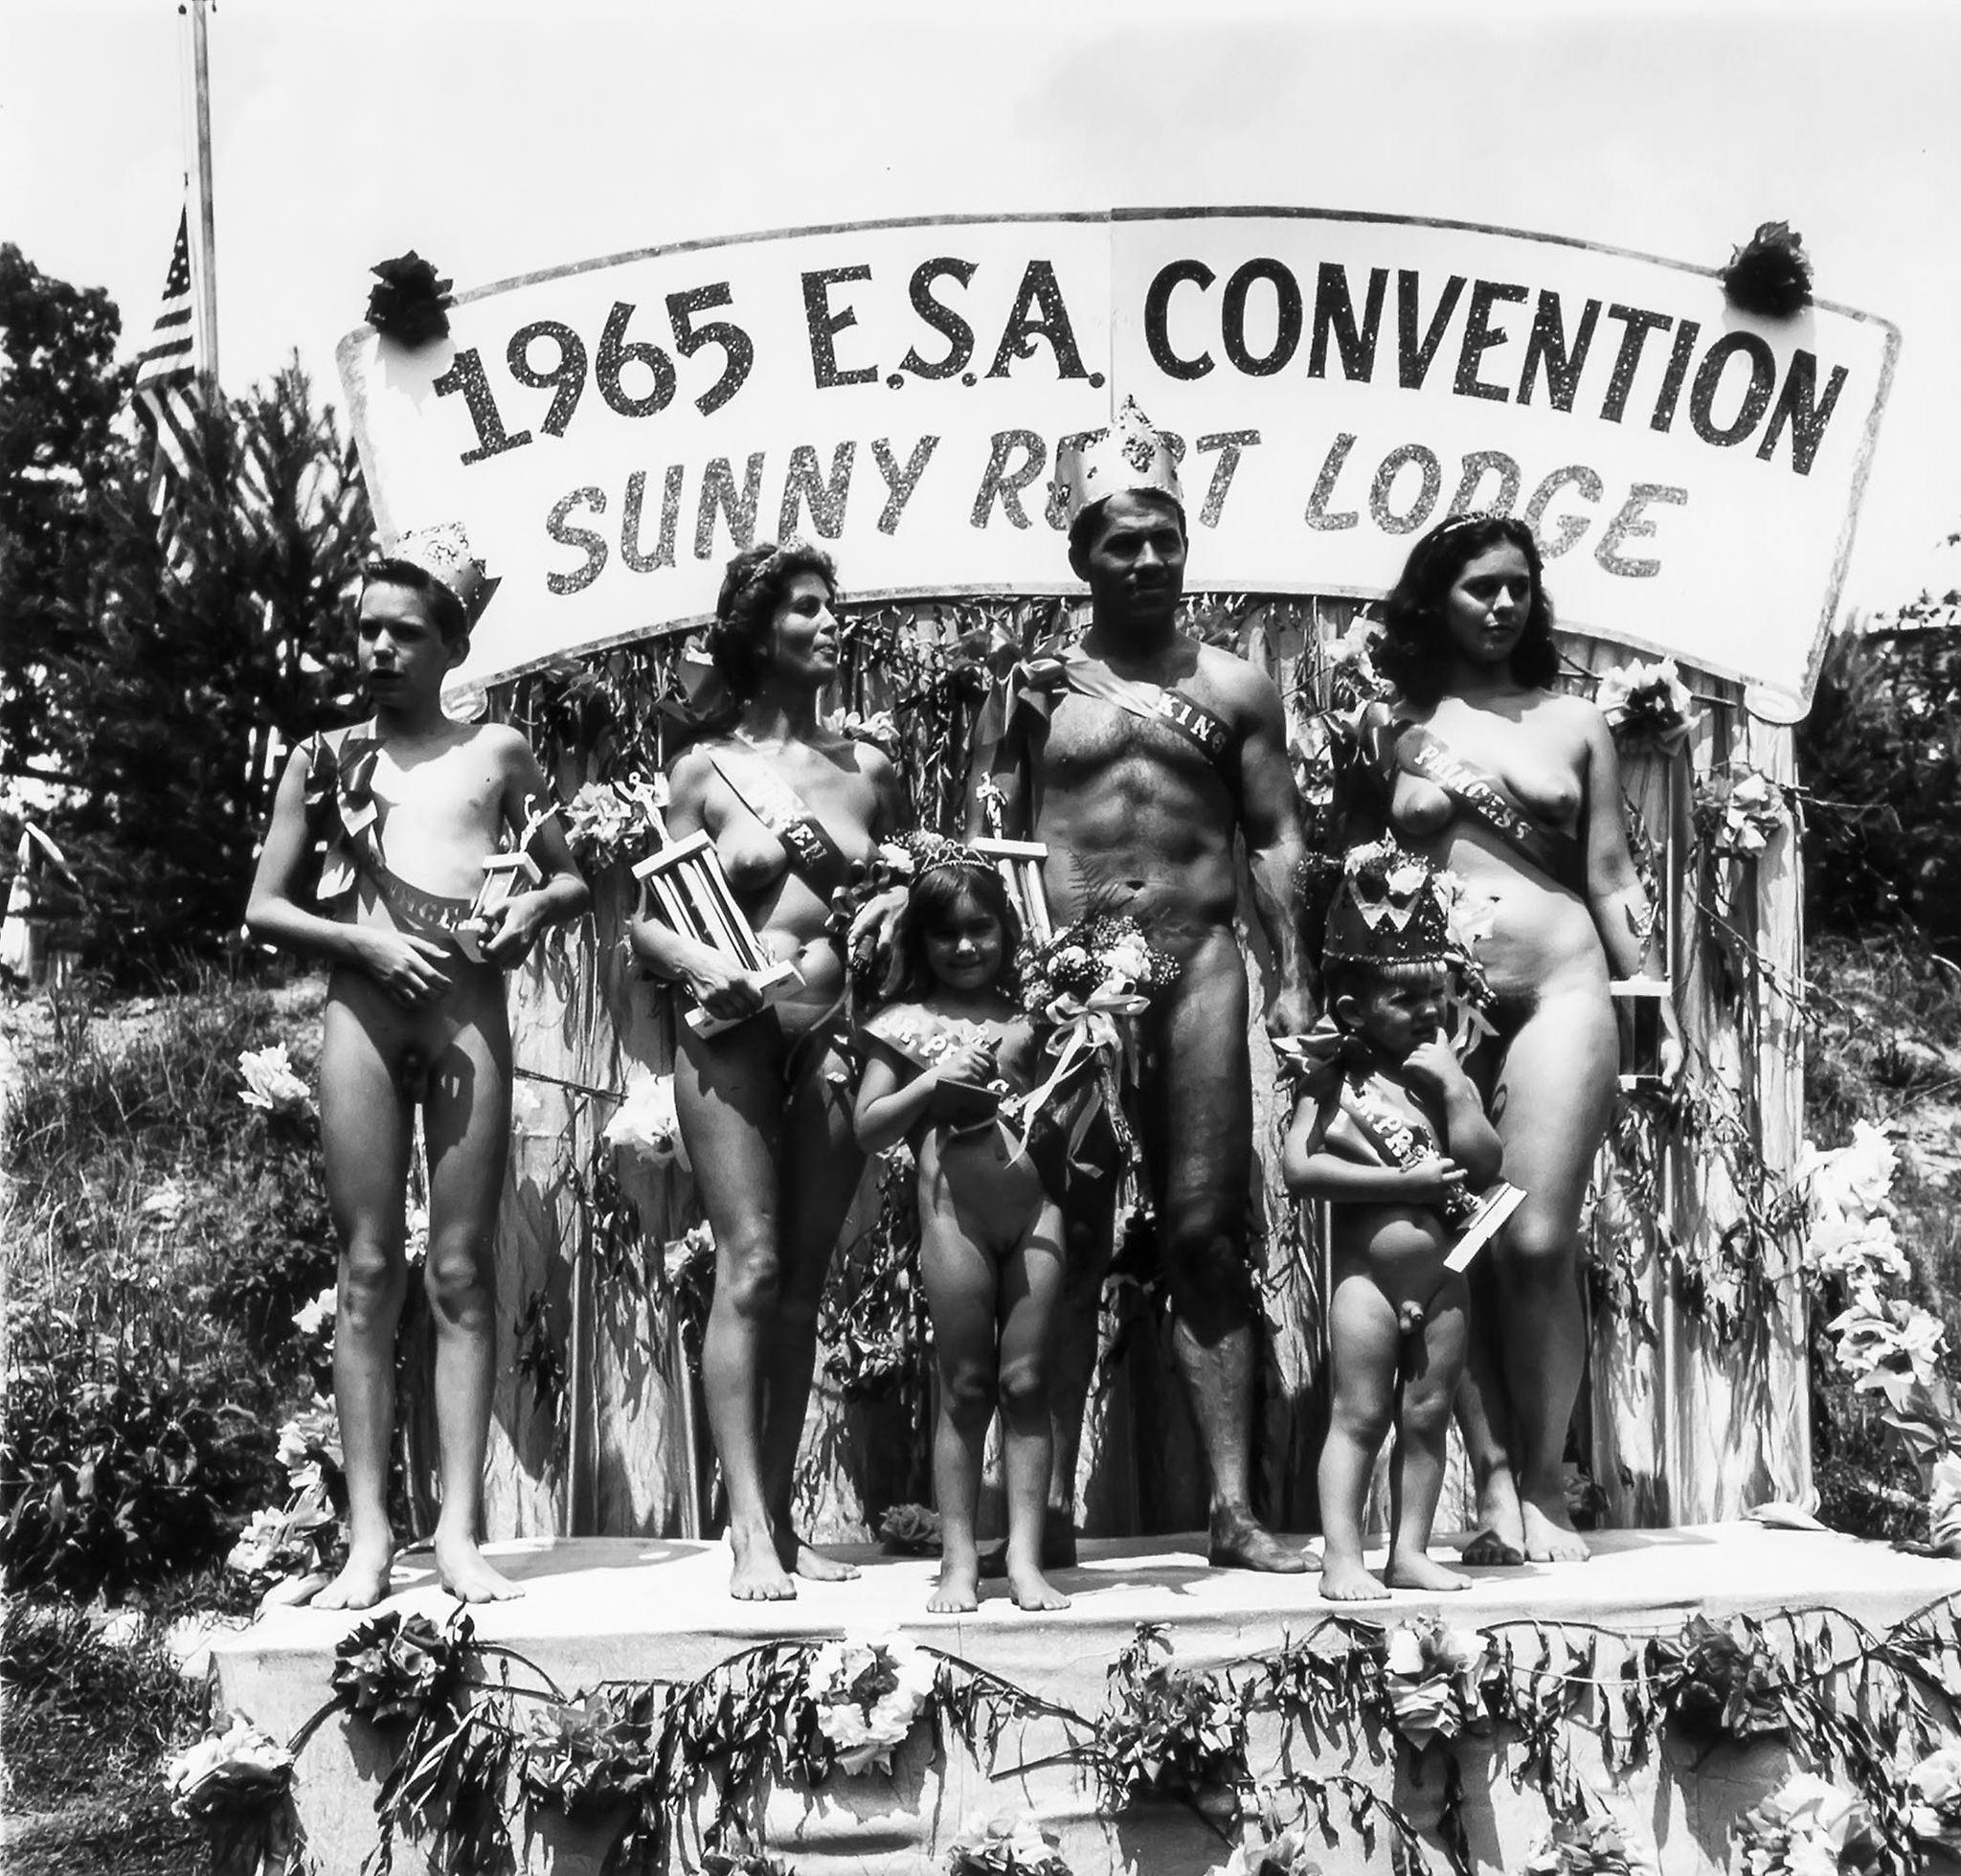 collin wynn share retro nudist camps photos